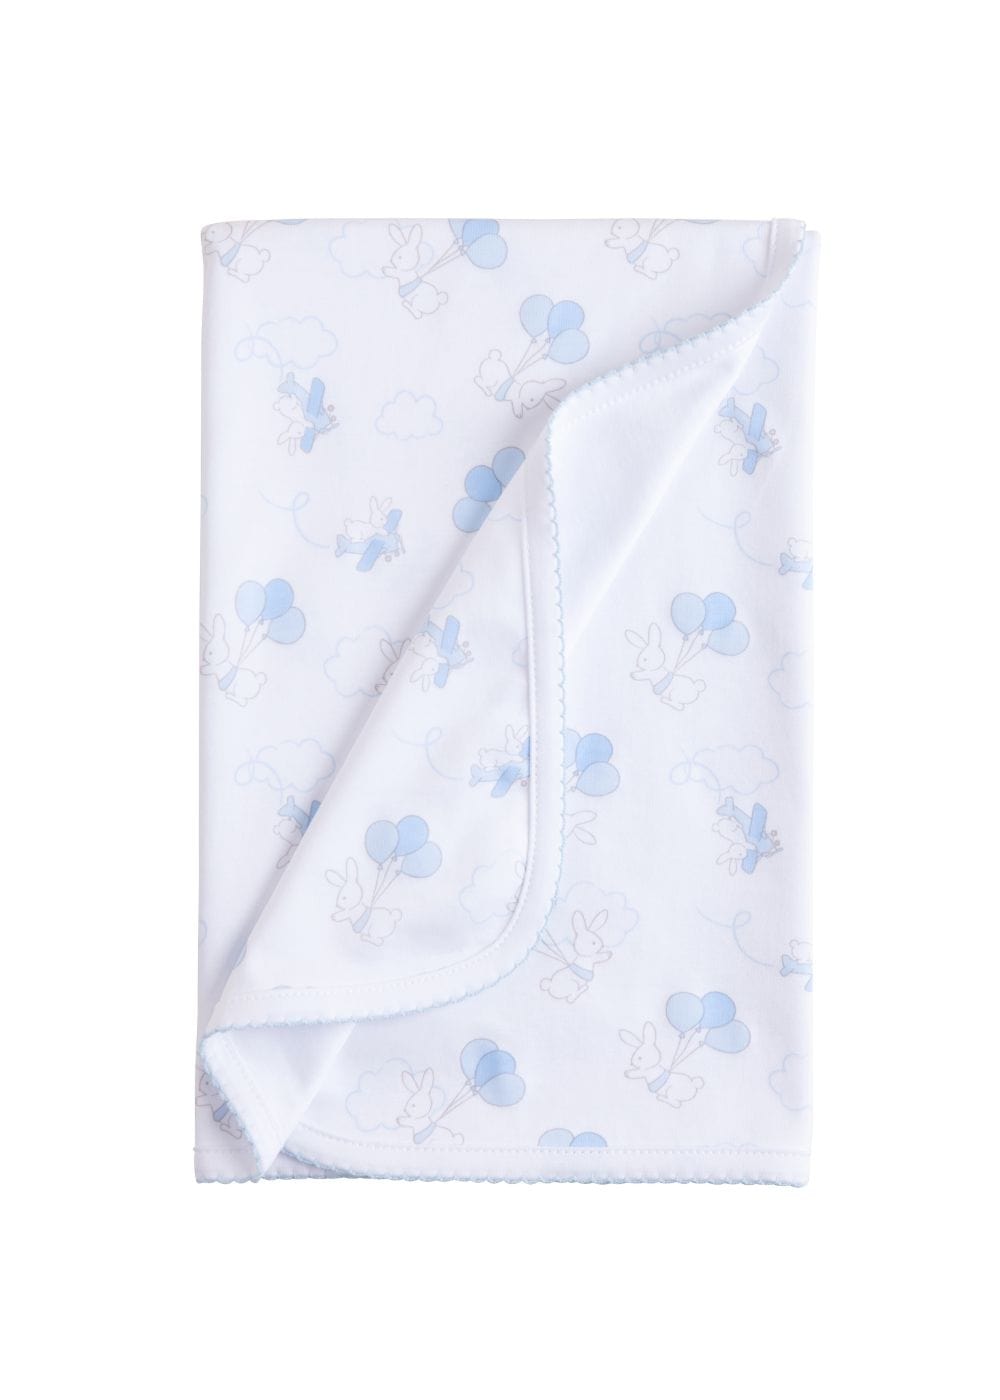 seguridadindustrialcr boy printed swaddle blanket, blue bunny design for spring